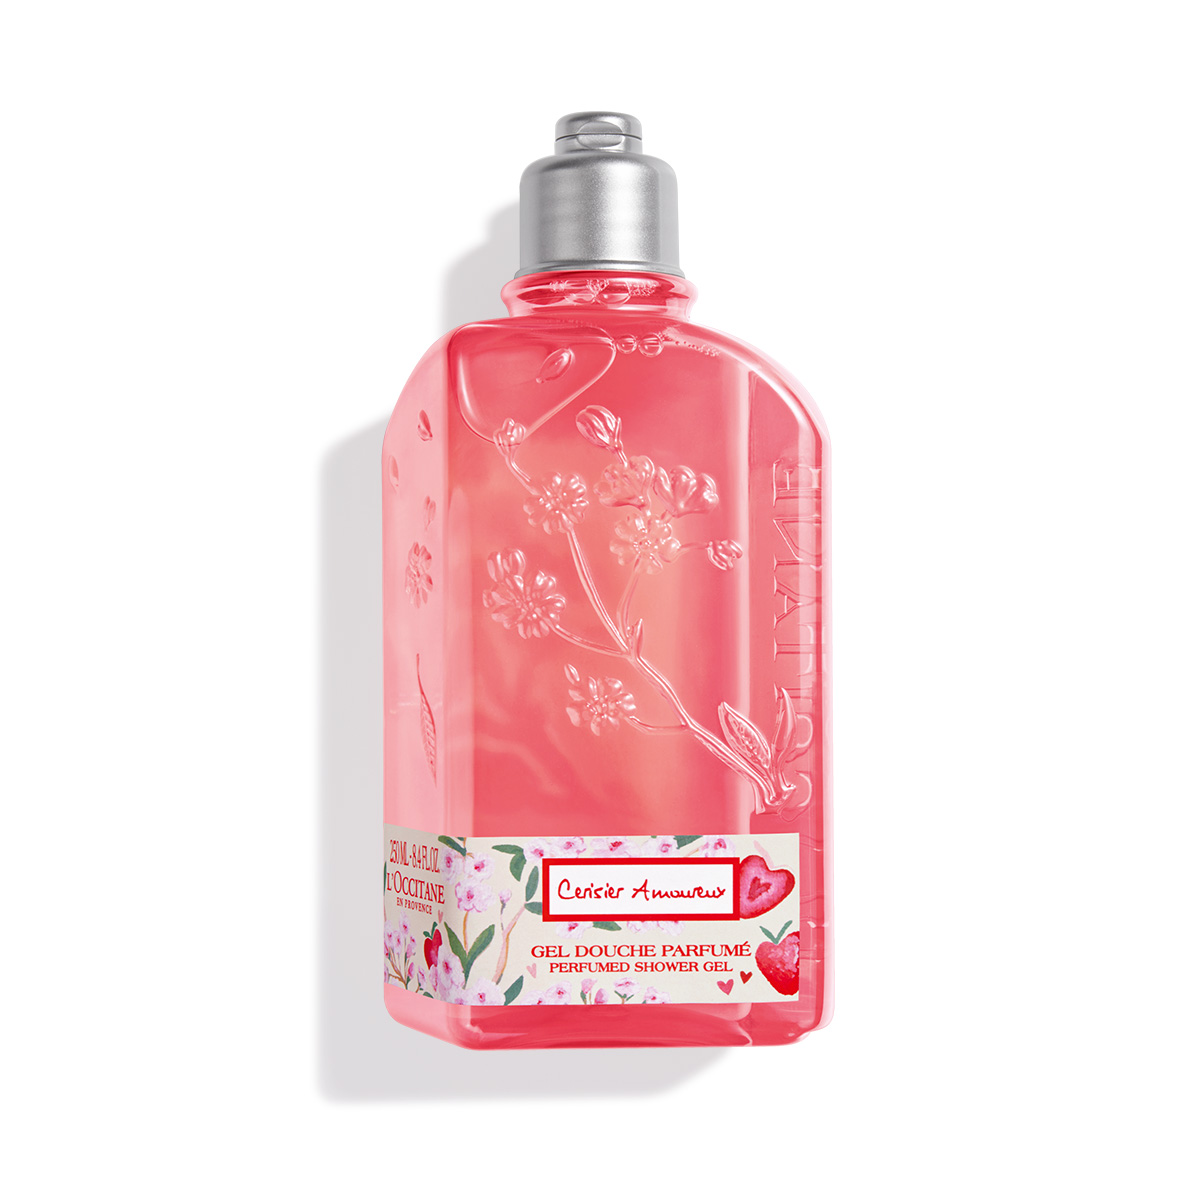 Cherry Strawberry Blossom Shower Gel